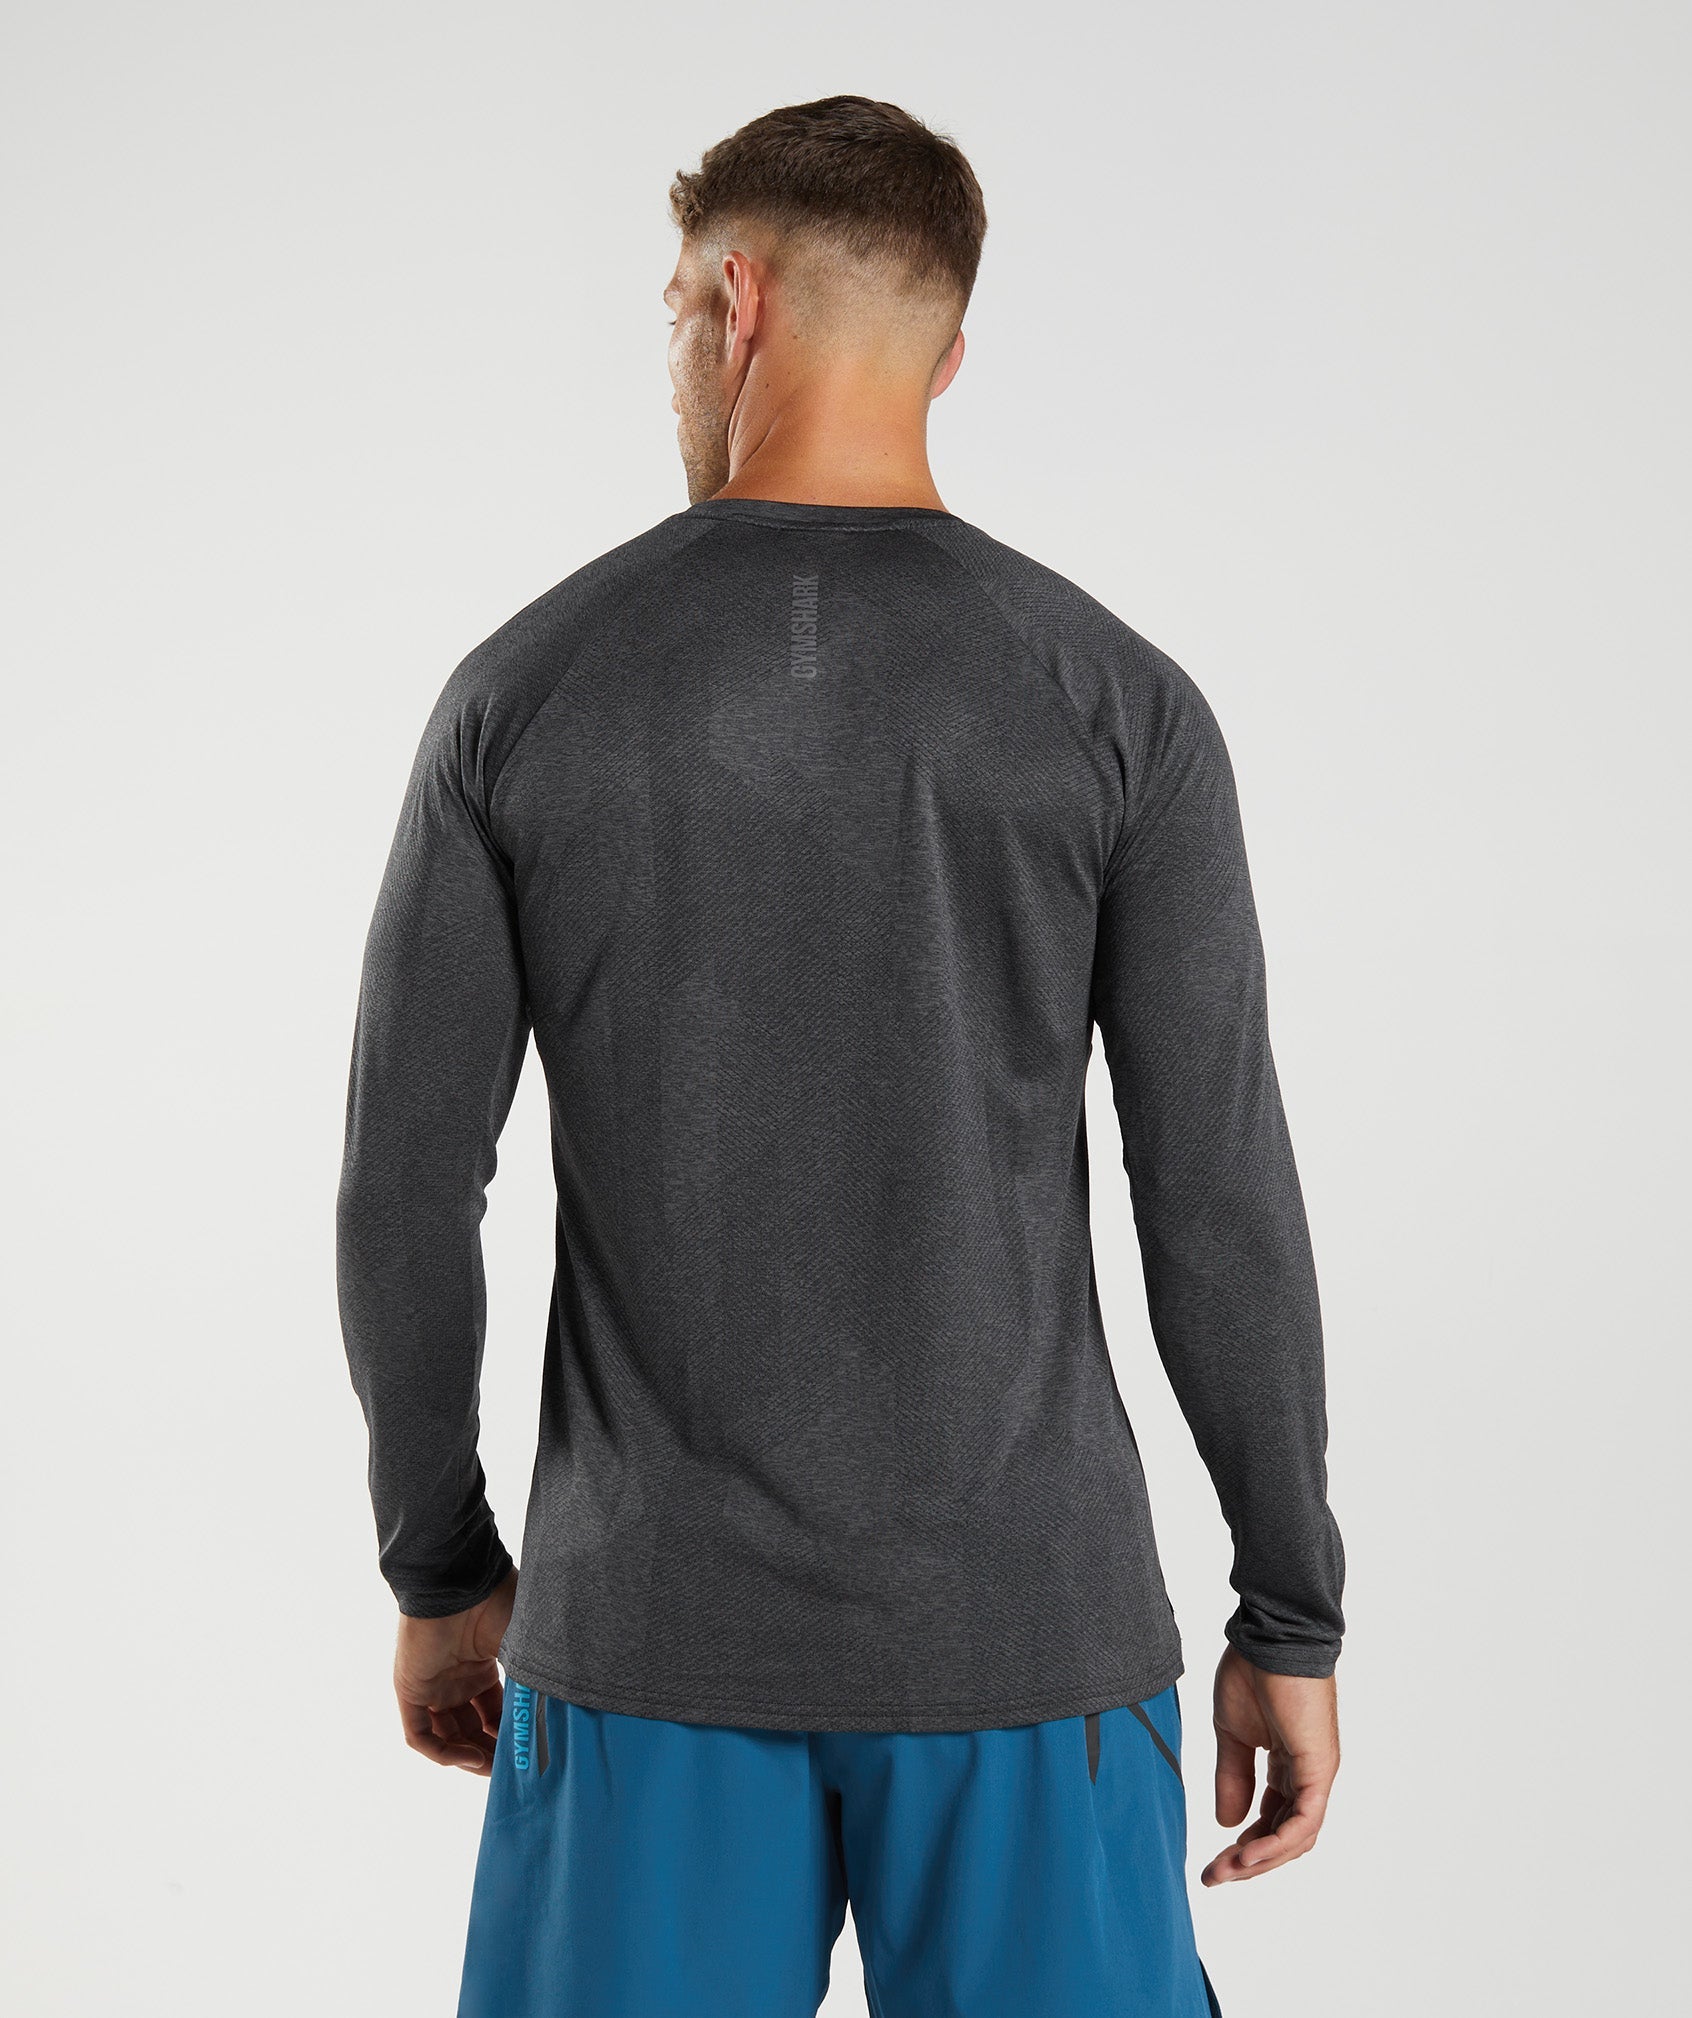 Apex Long Sleeve T-Shirt in Black/Silhouette Grey